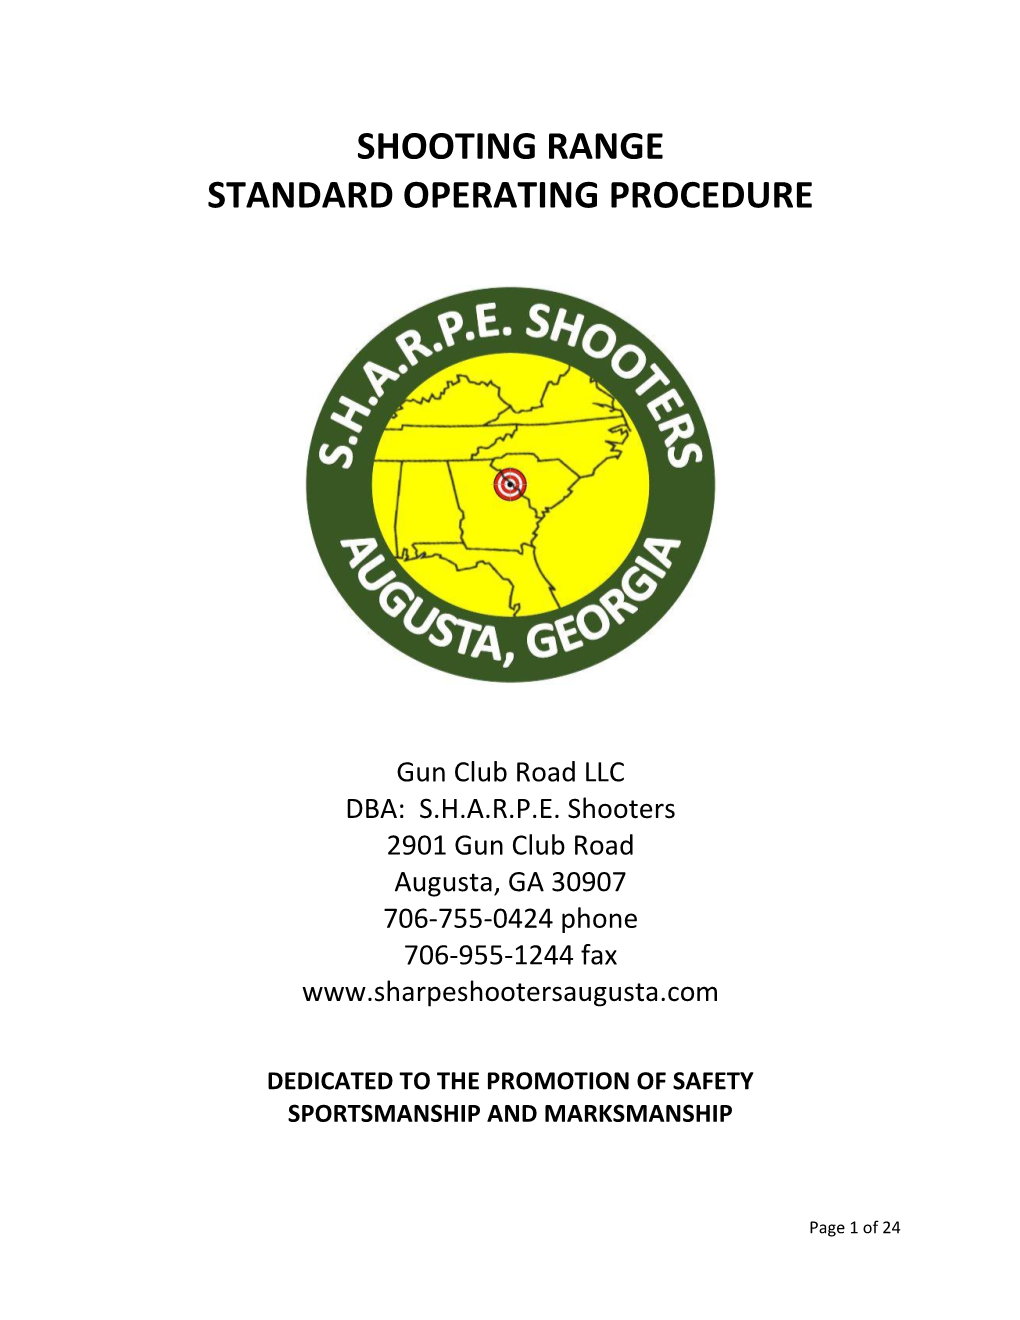 Shooting Range Standard Operating Procedure